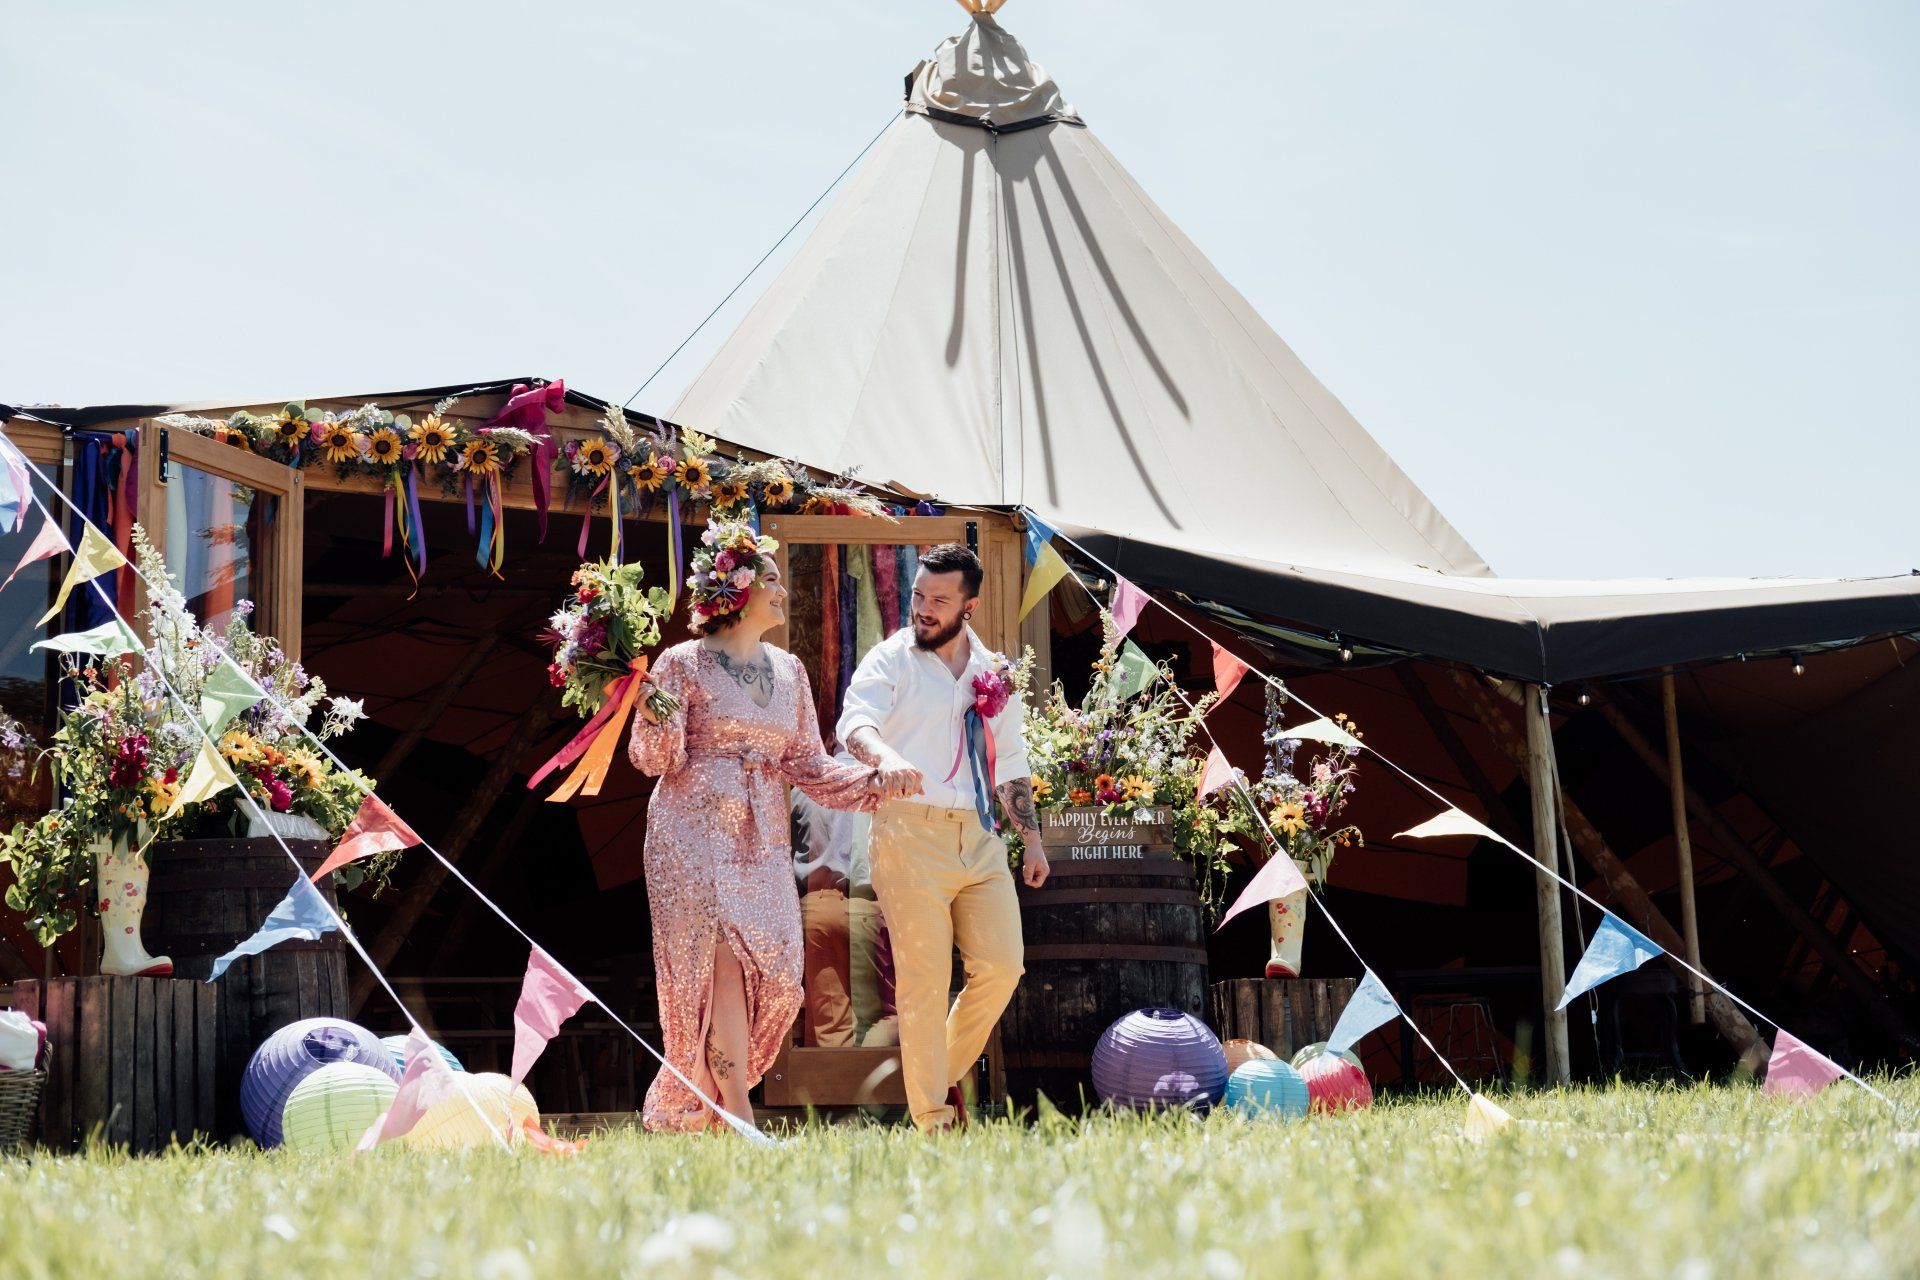 colourful Tipi wedding ideas | Festival vibes wedding themes